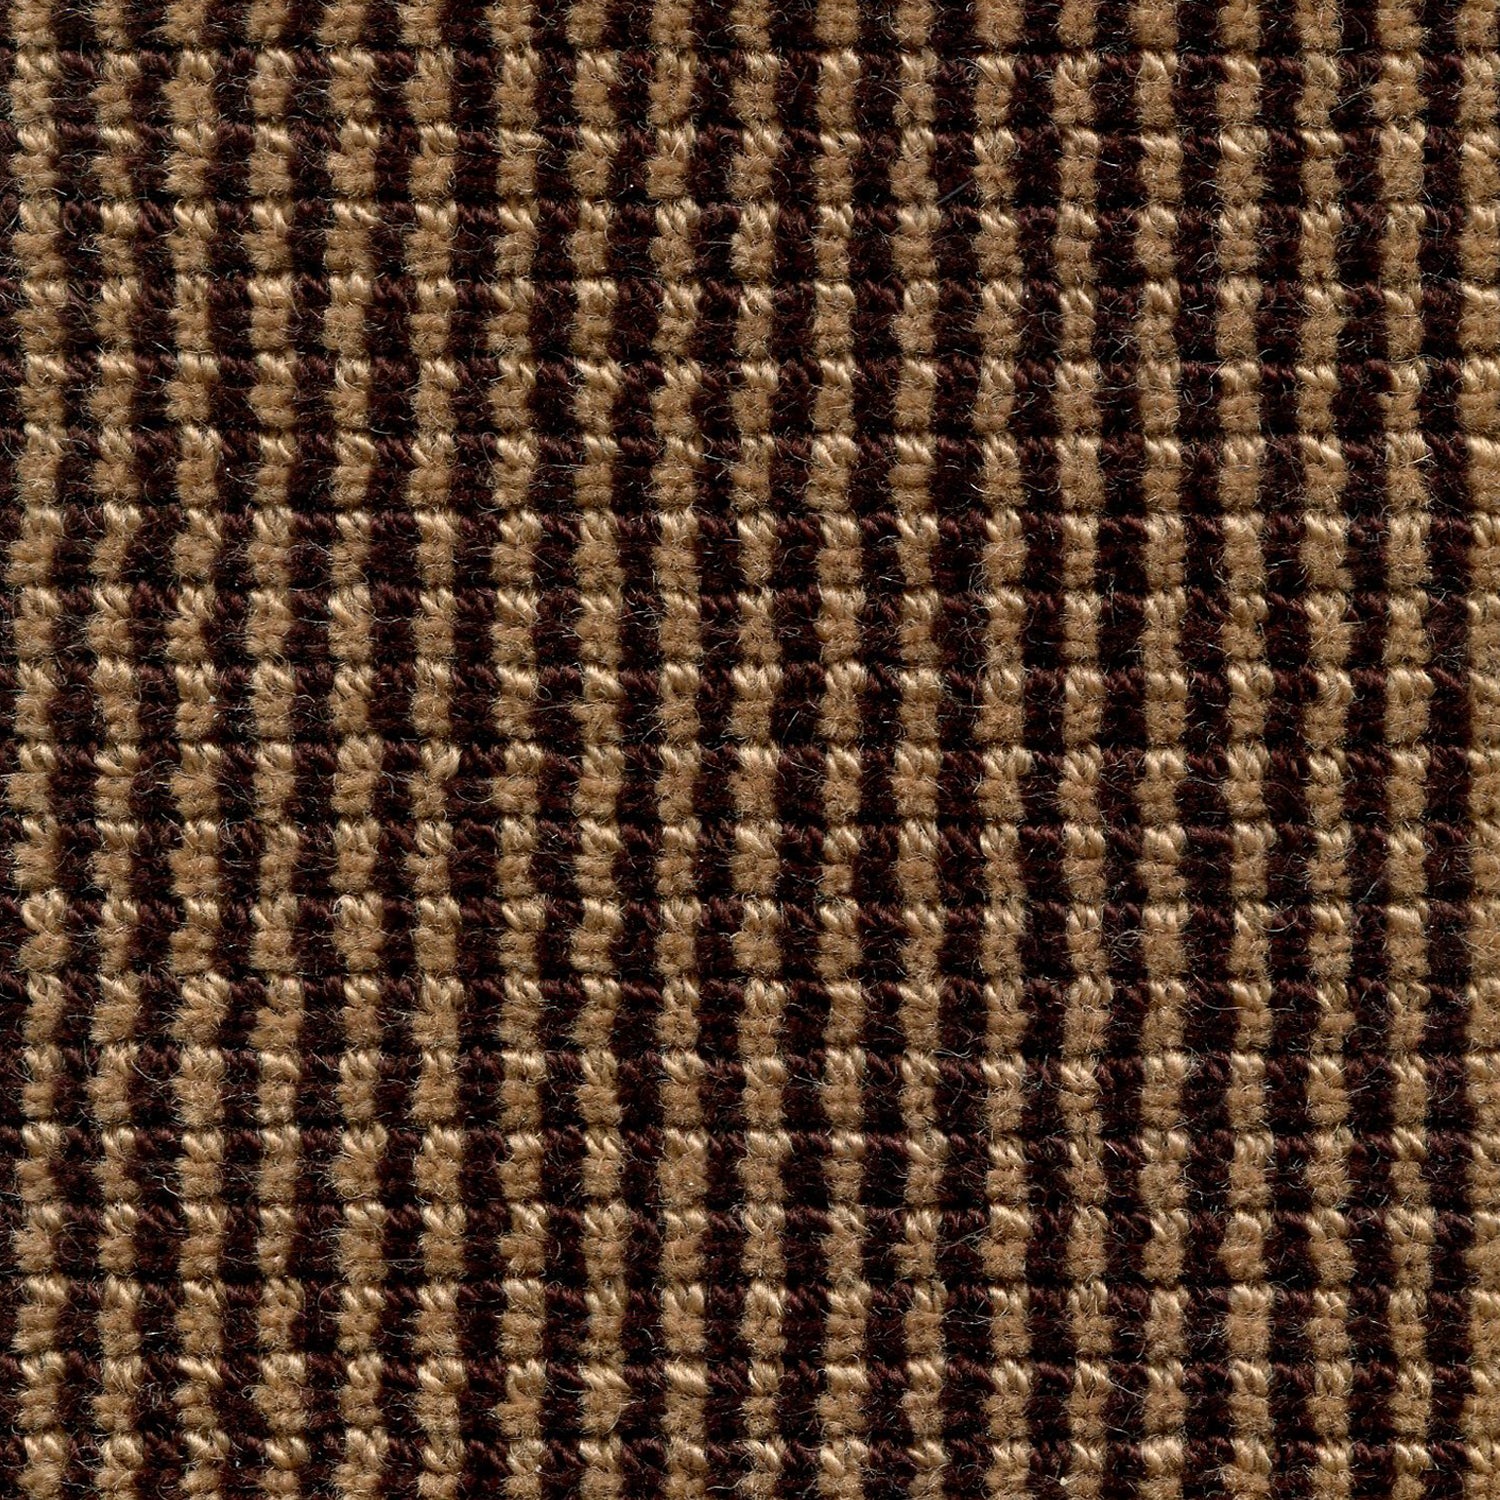 Wool broadloom carpet swatch in a high-pile striped weave in tan and dark brown.